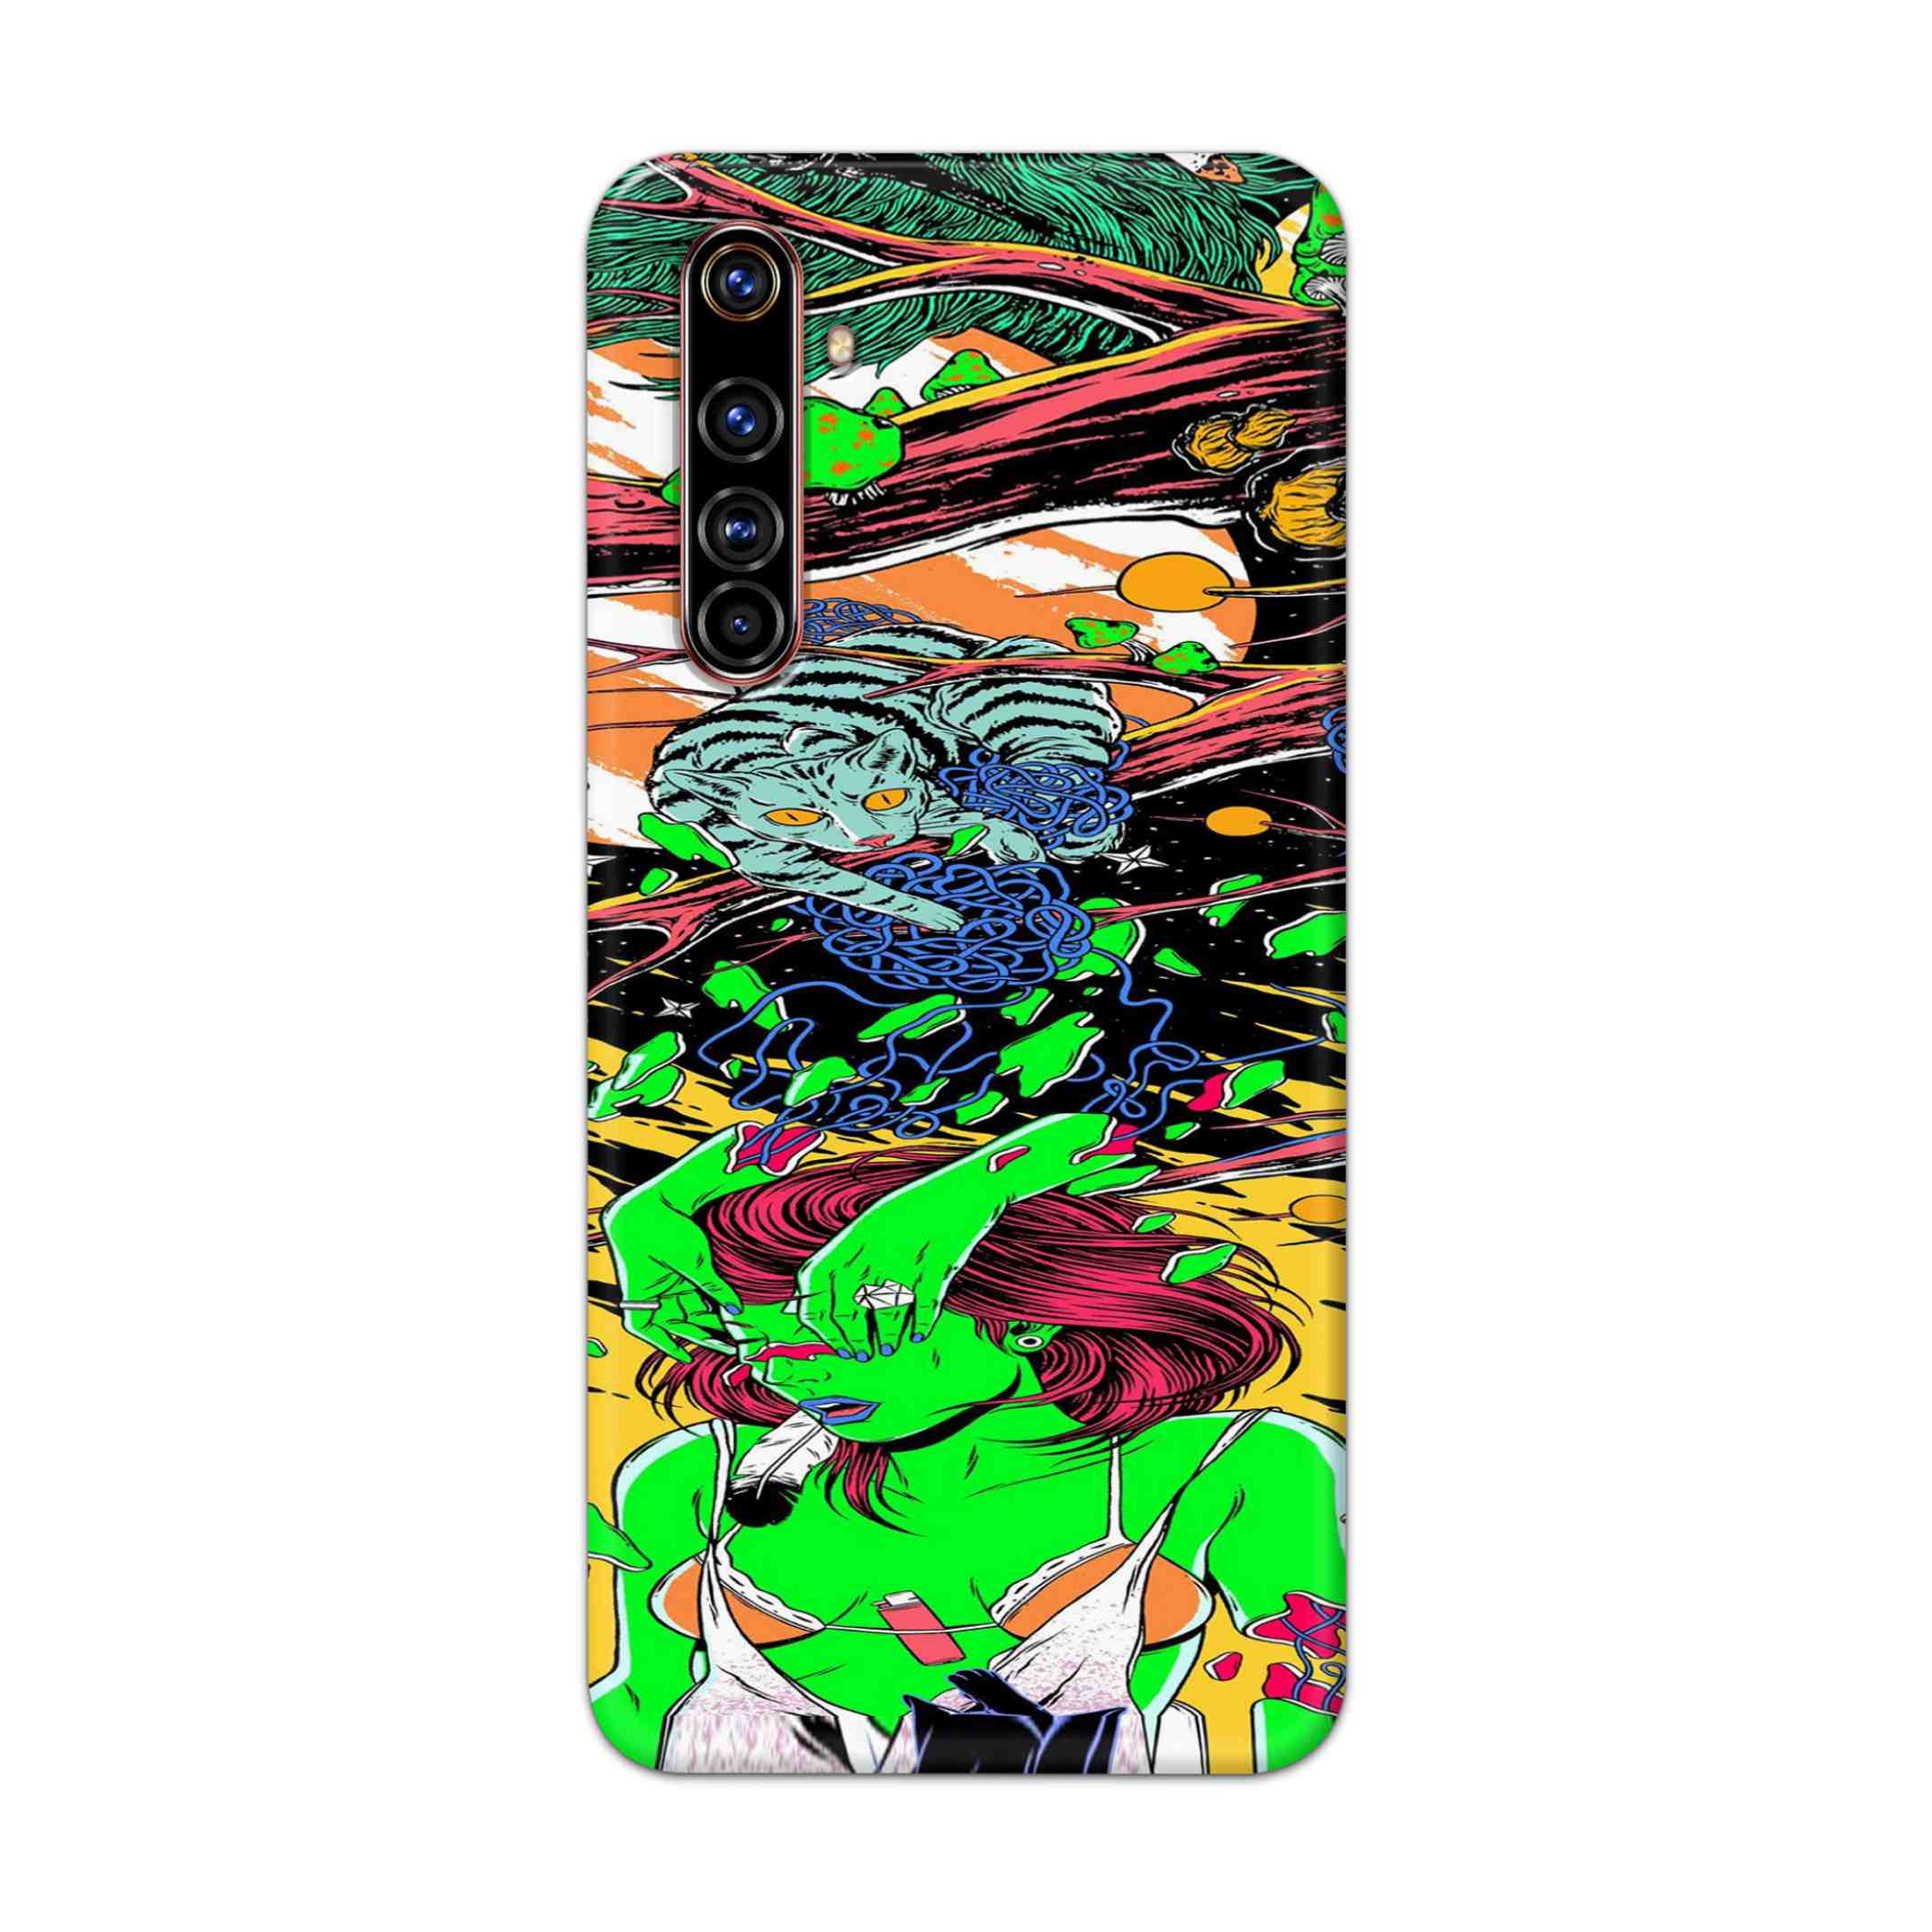 Buy Green Girl Art Hard Back Mobile Phone Case Cover For Realme X50 Pro Online